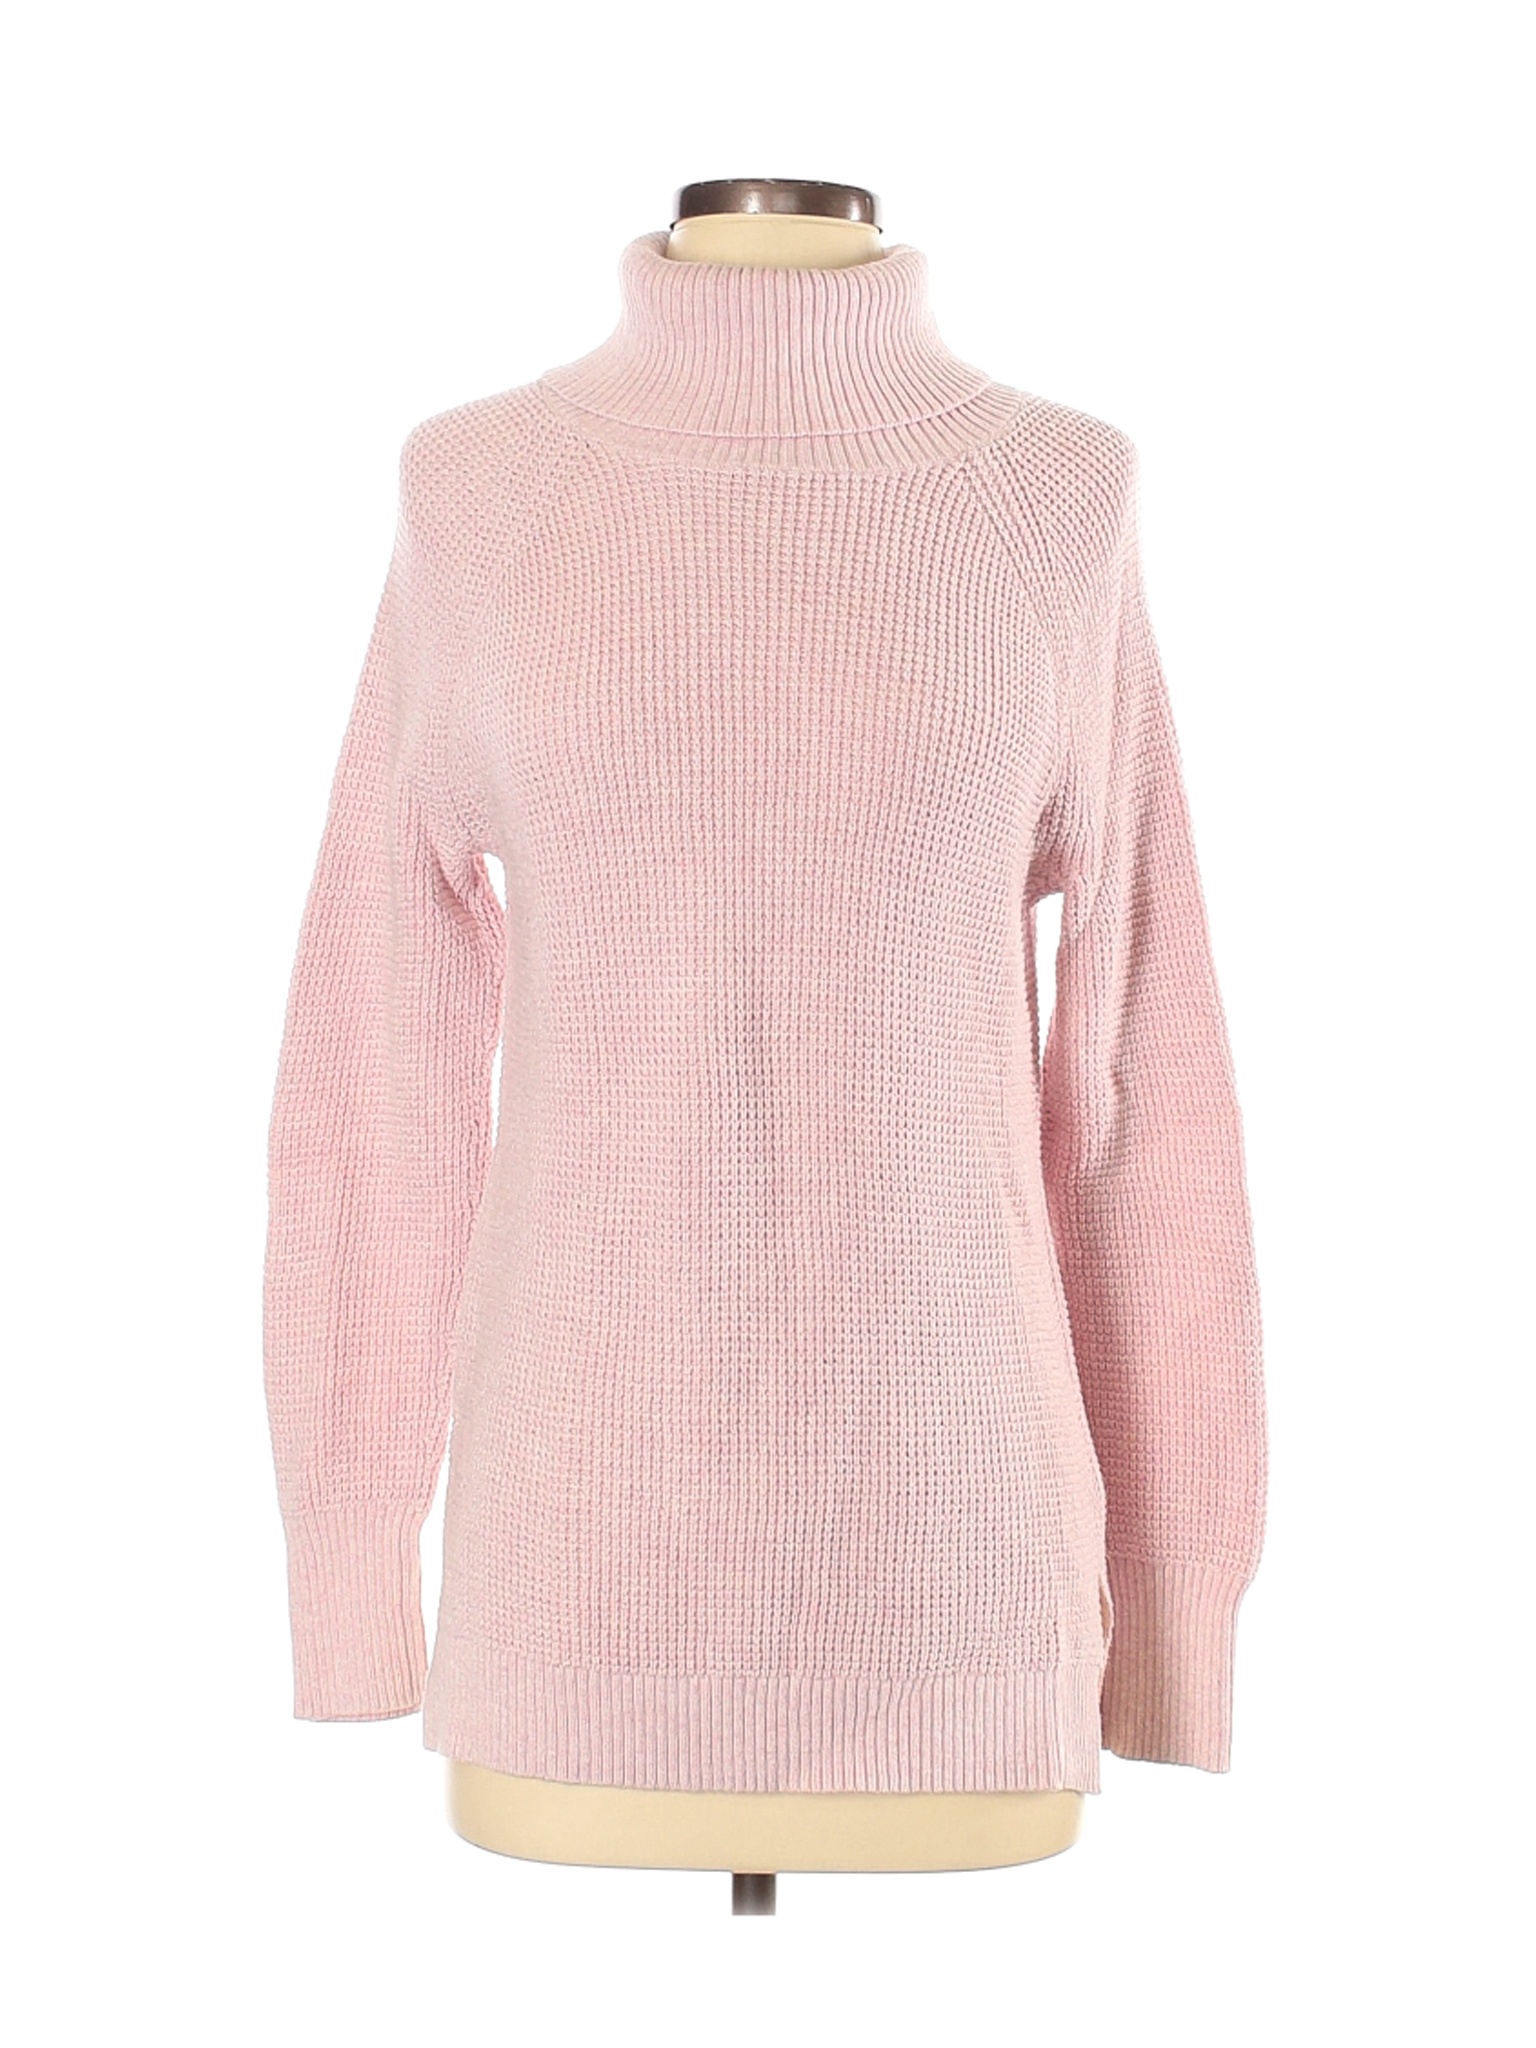 J.Crew Mercantile Women Pink Turtleneck Sweater S | eBay